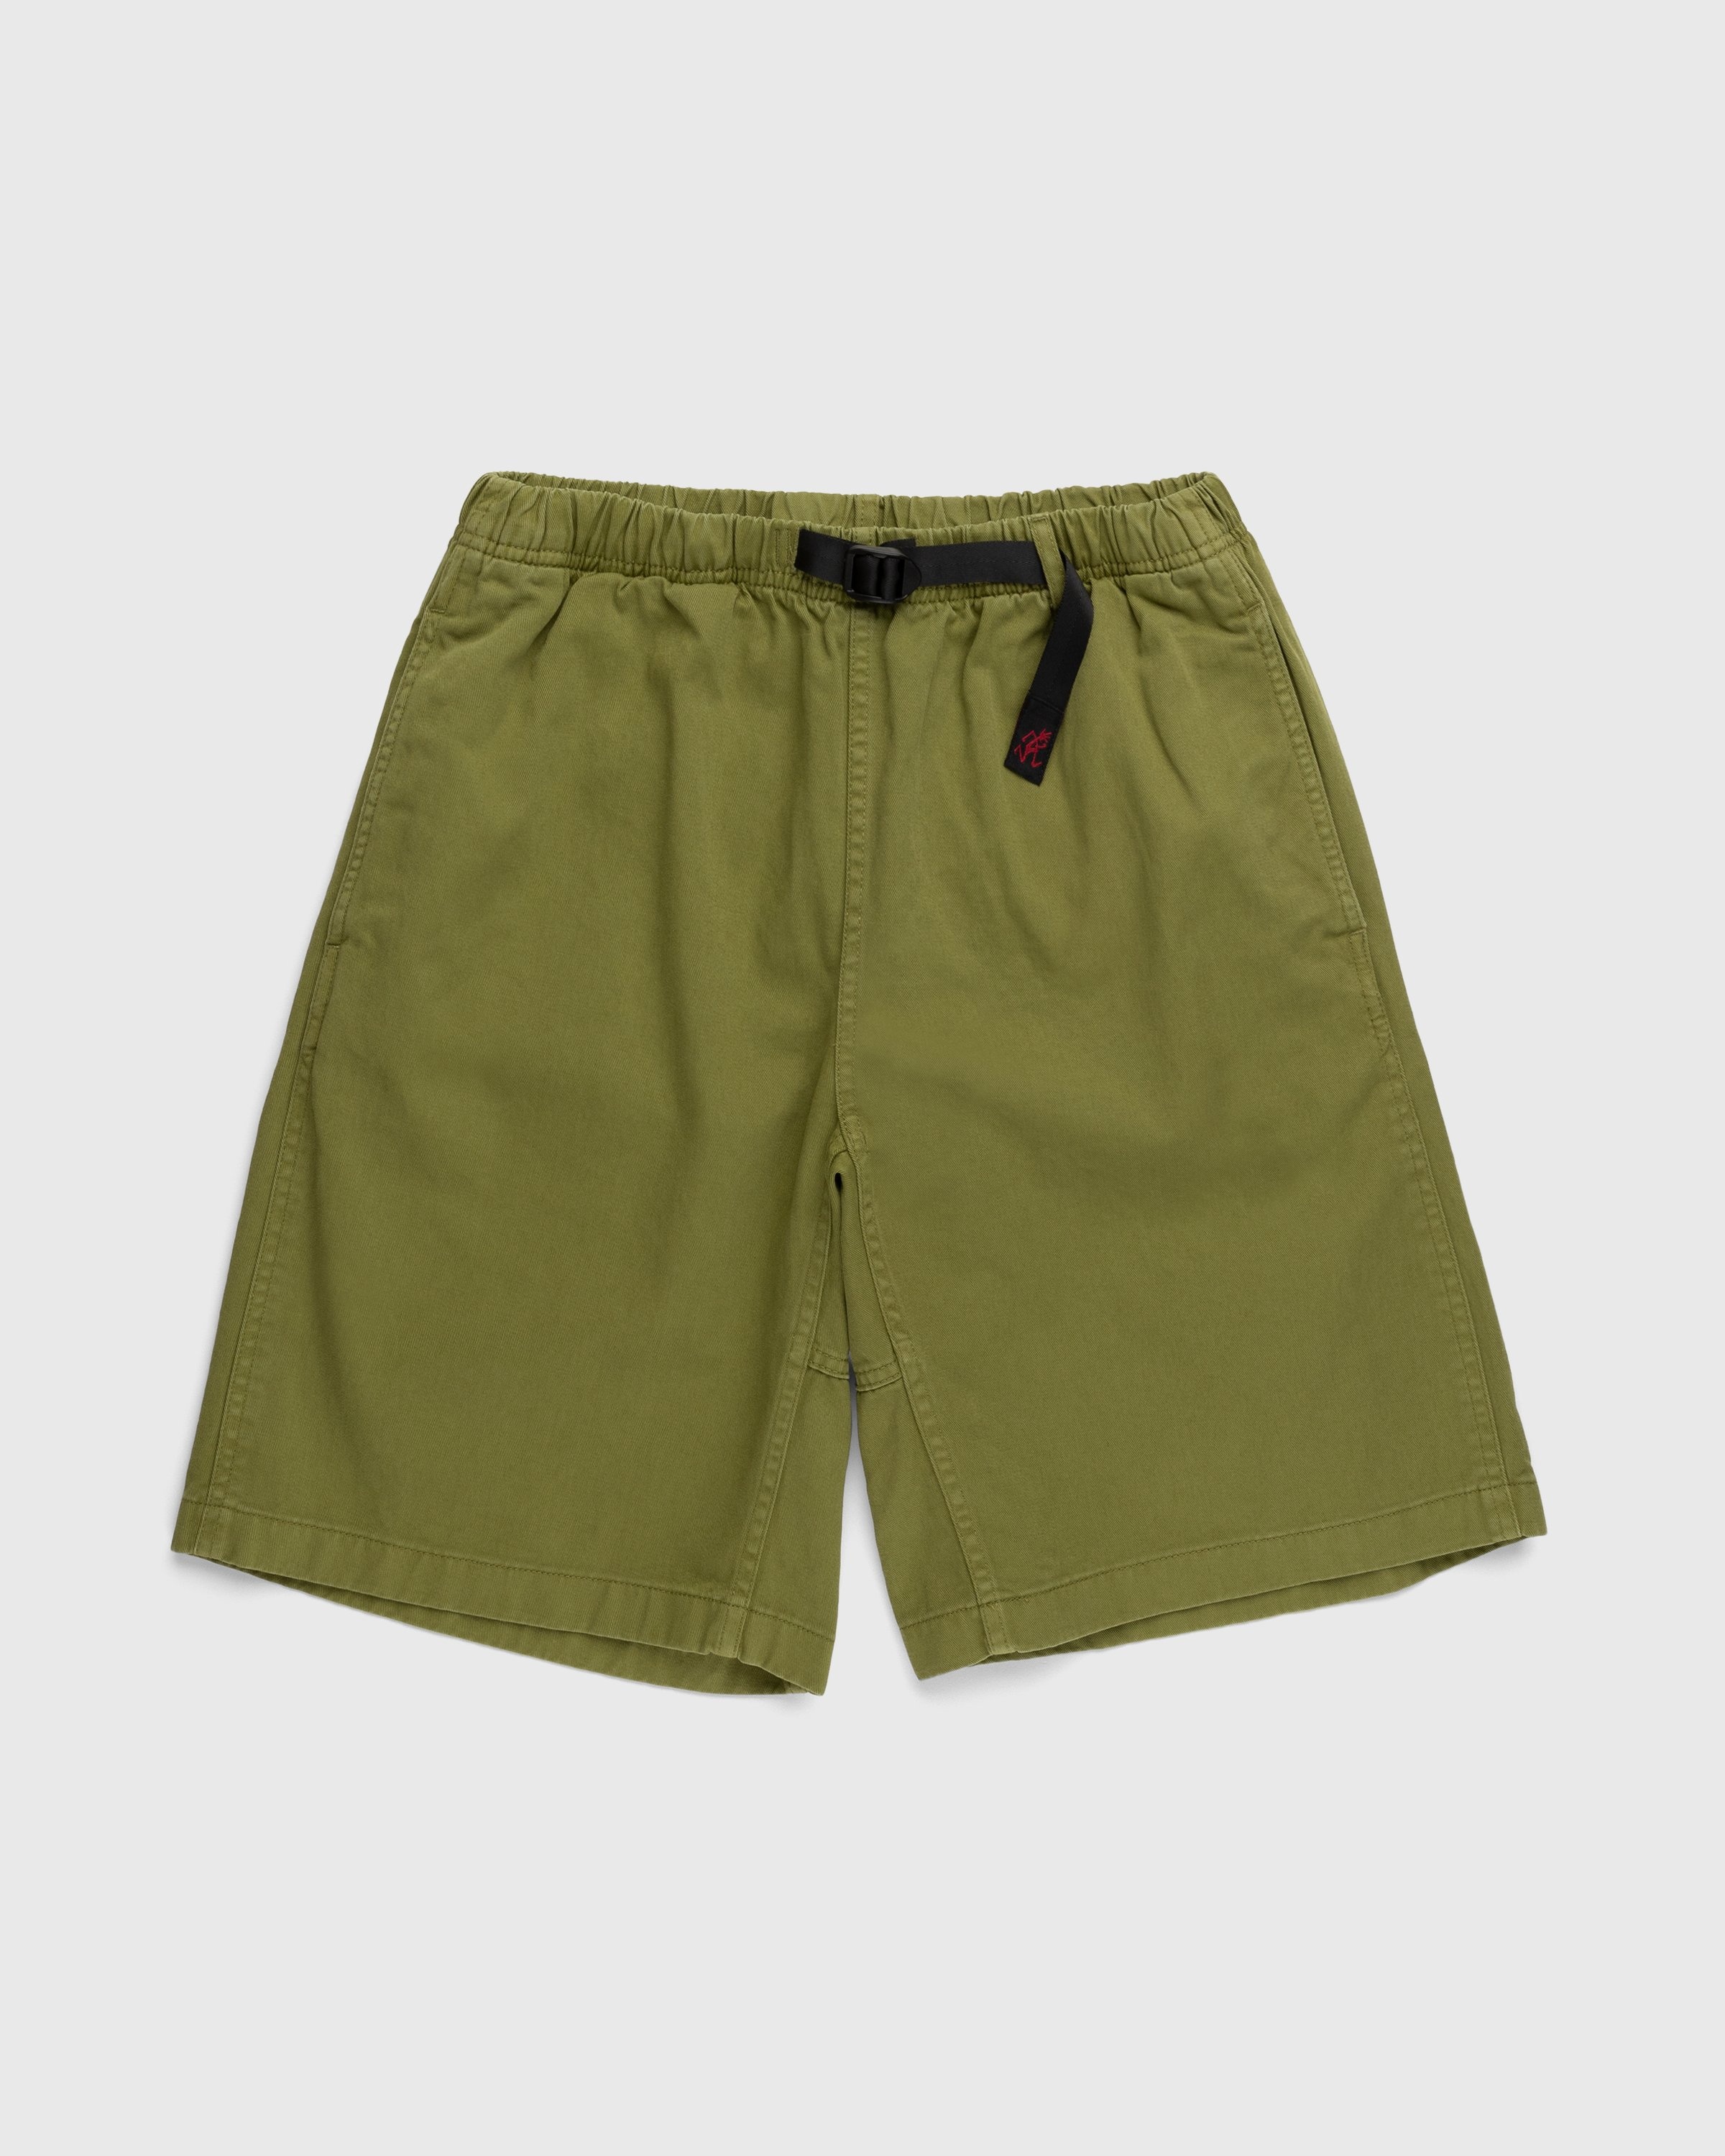 Gramicci – G-Shorts Moss - Bermuda Cuts - Green - Image 1